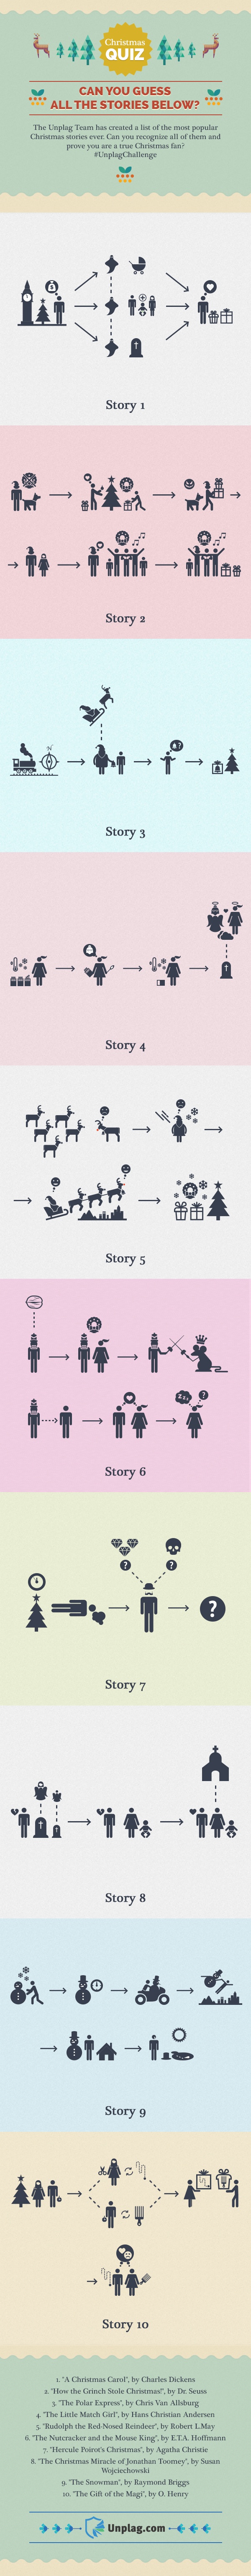 Christmas Story Quiz Infographic